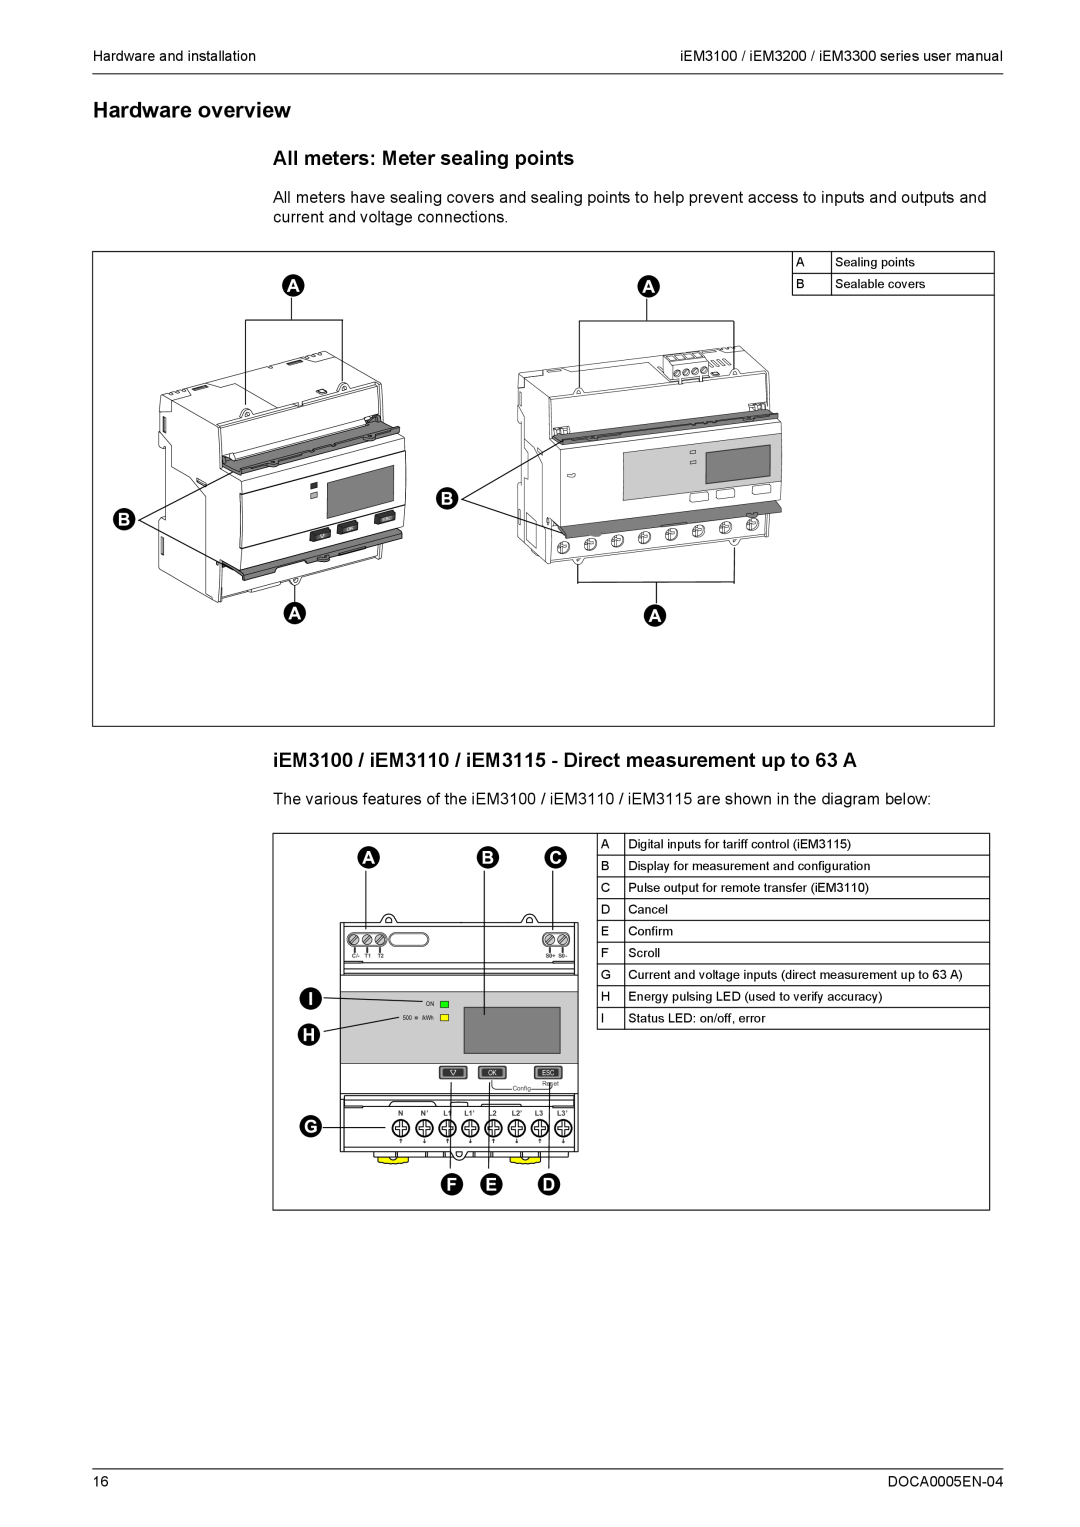 Schneider Electric iEM3200, iEM3300, iEM3100 user manual Hardware overview, All meters Meter sealing points 